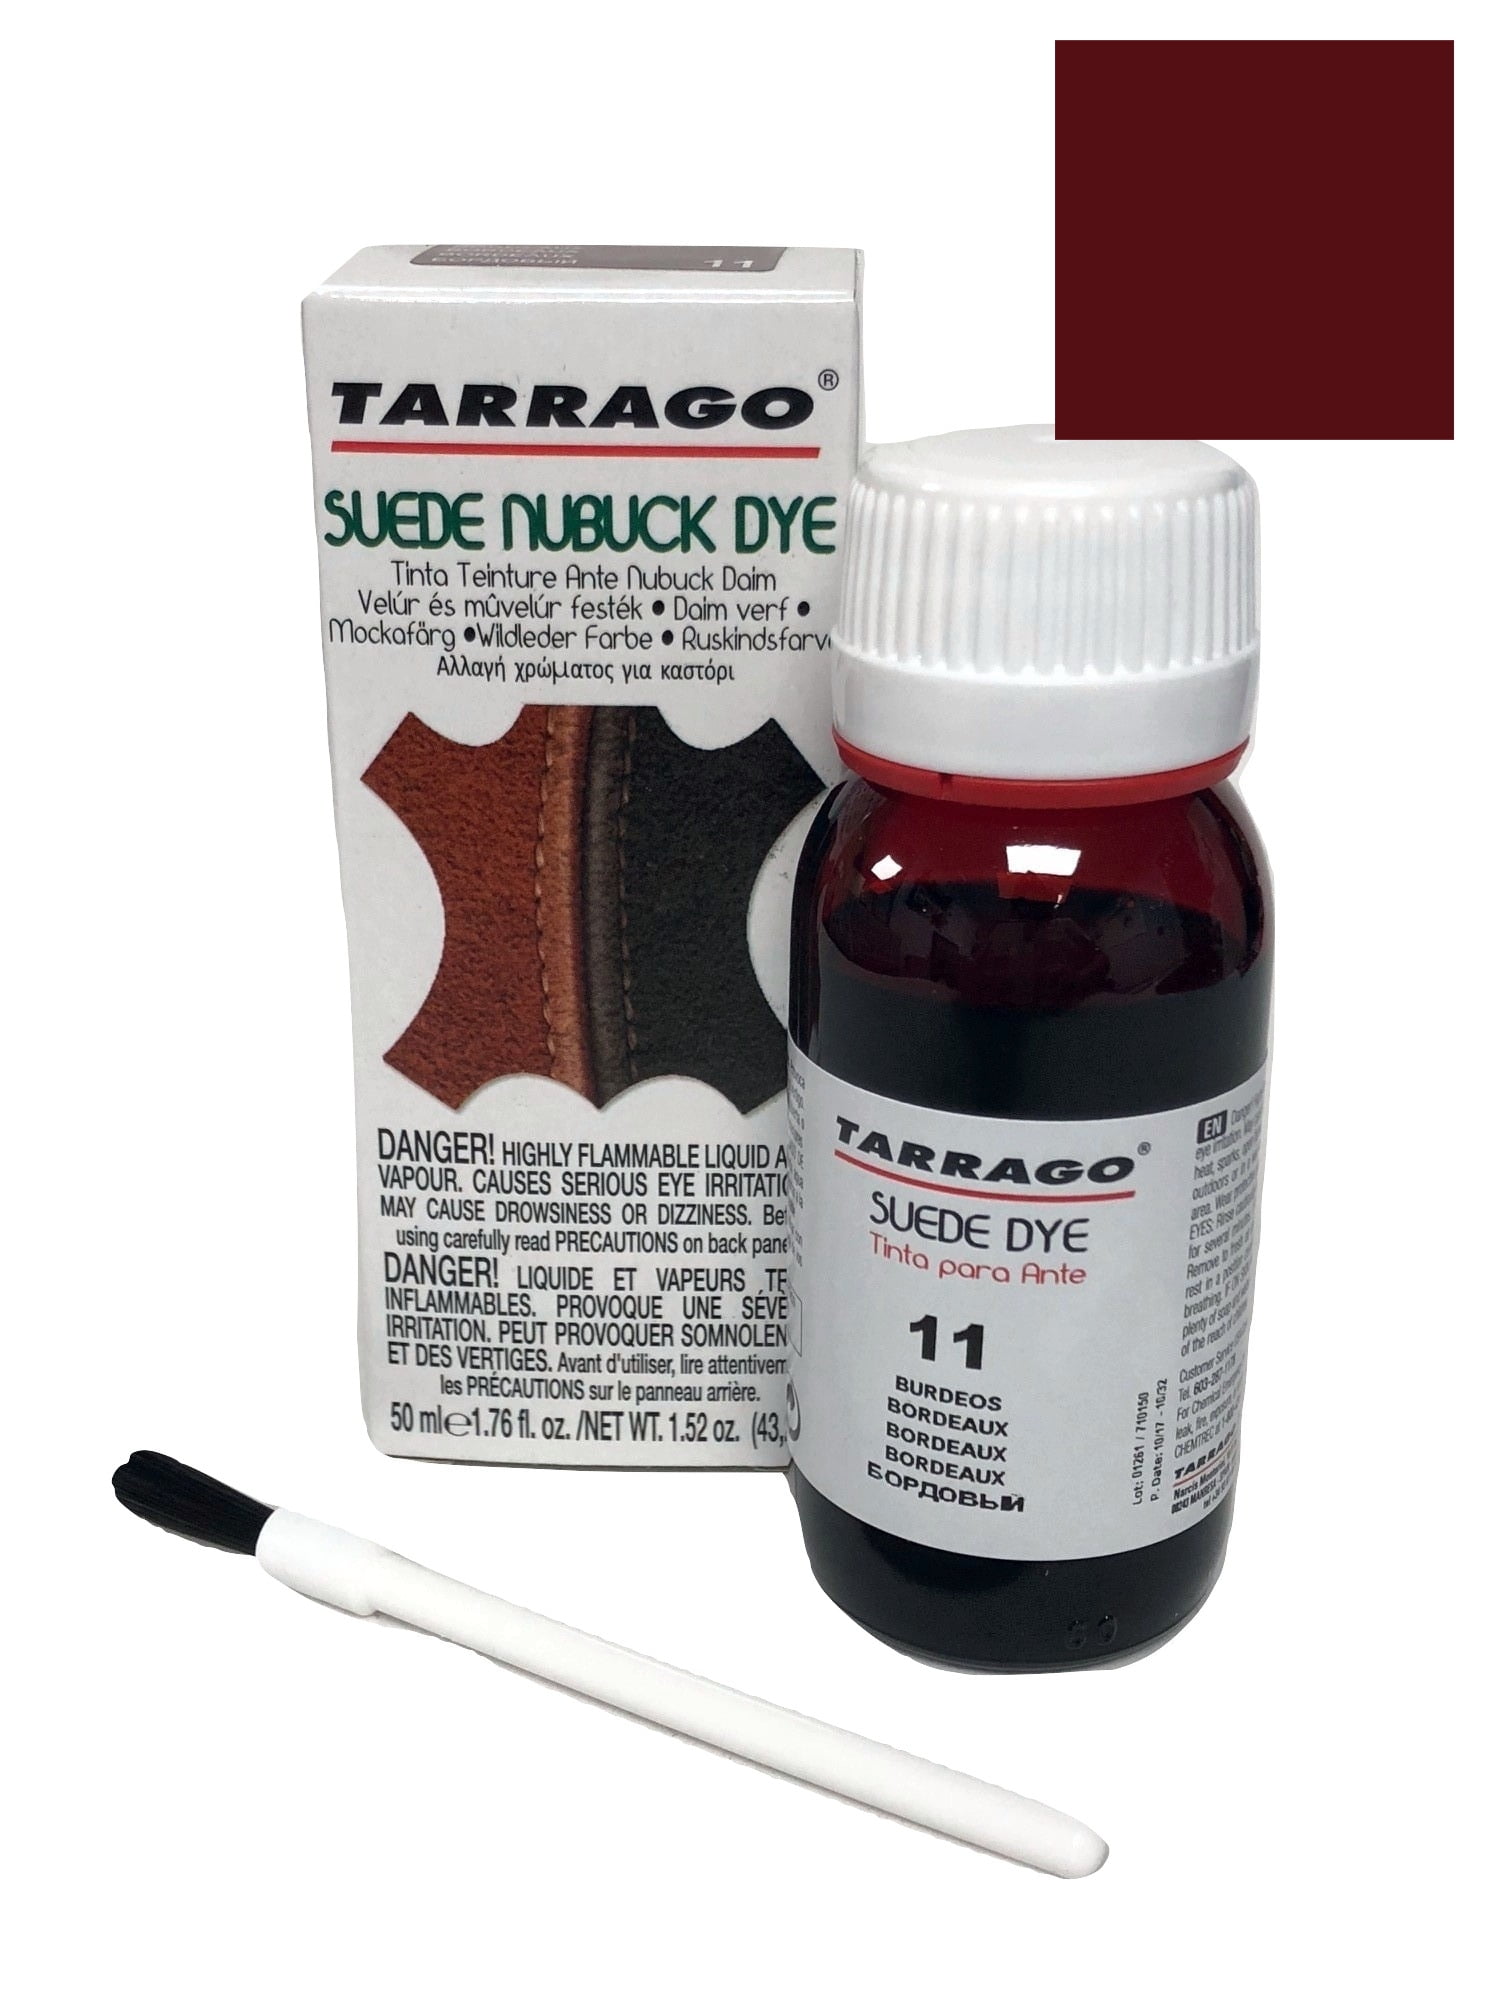 Tarrago Suede Dye, 50ml, #20 Brown Sugar 